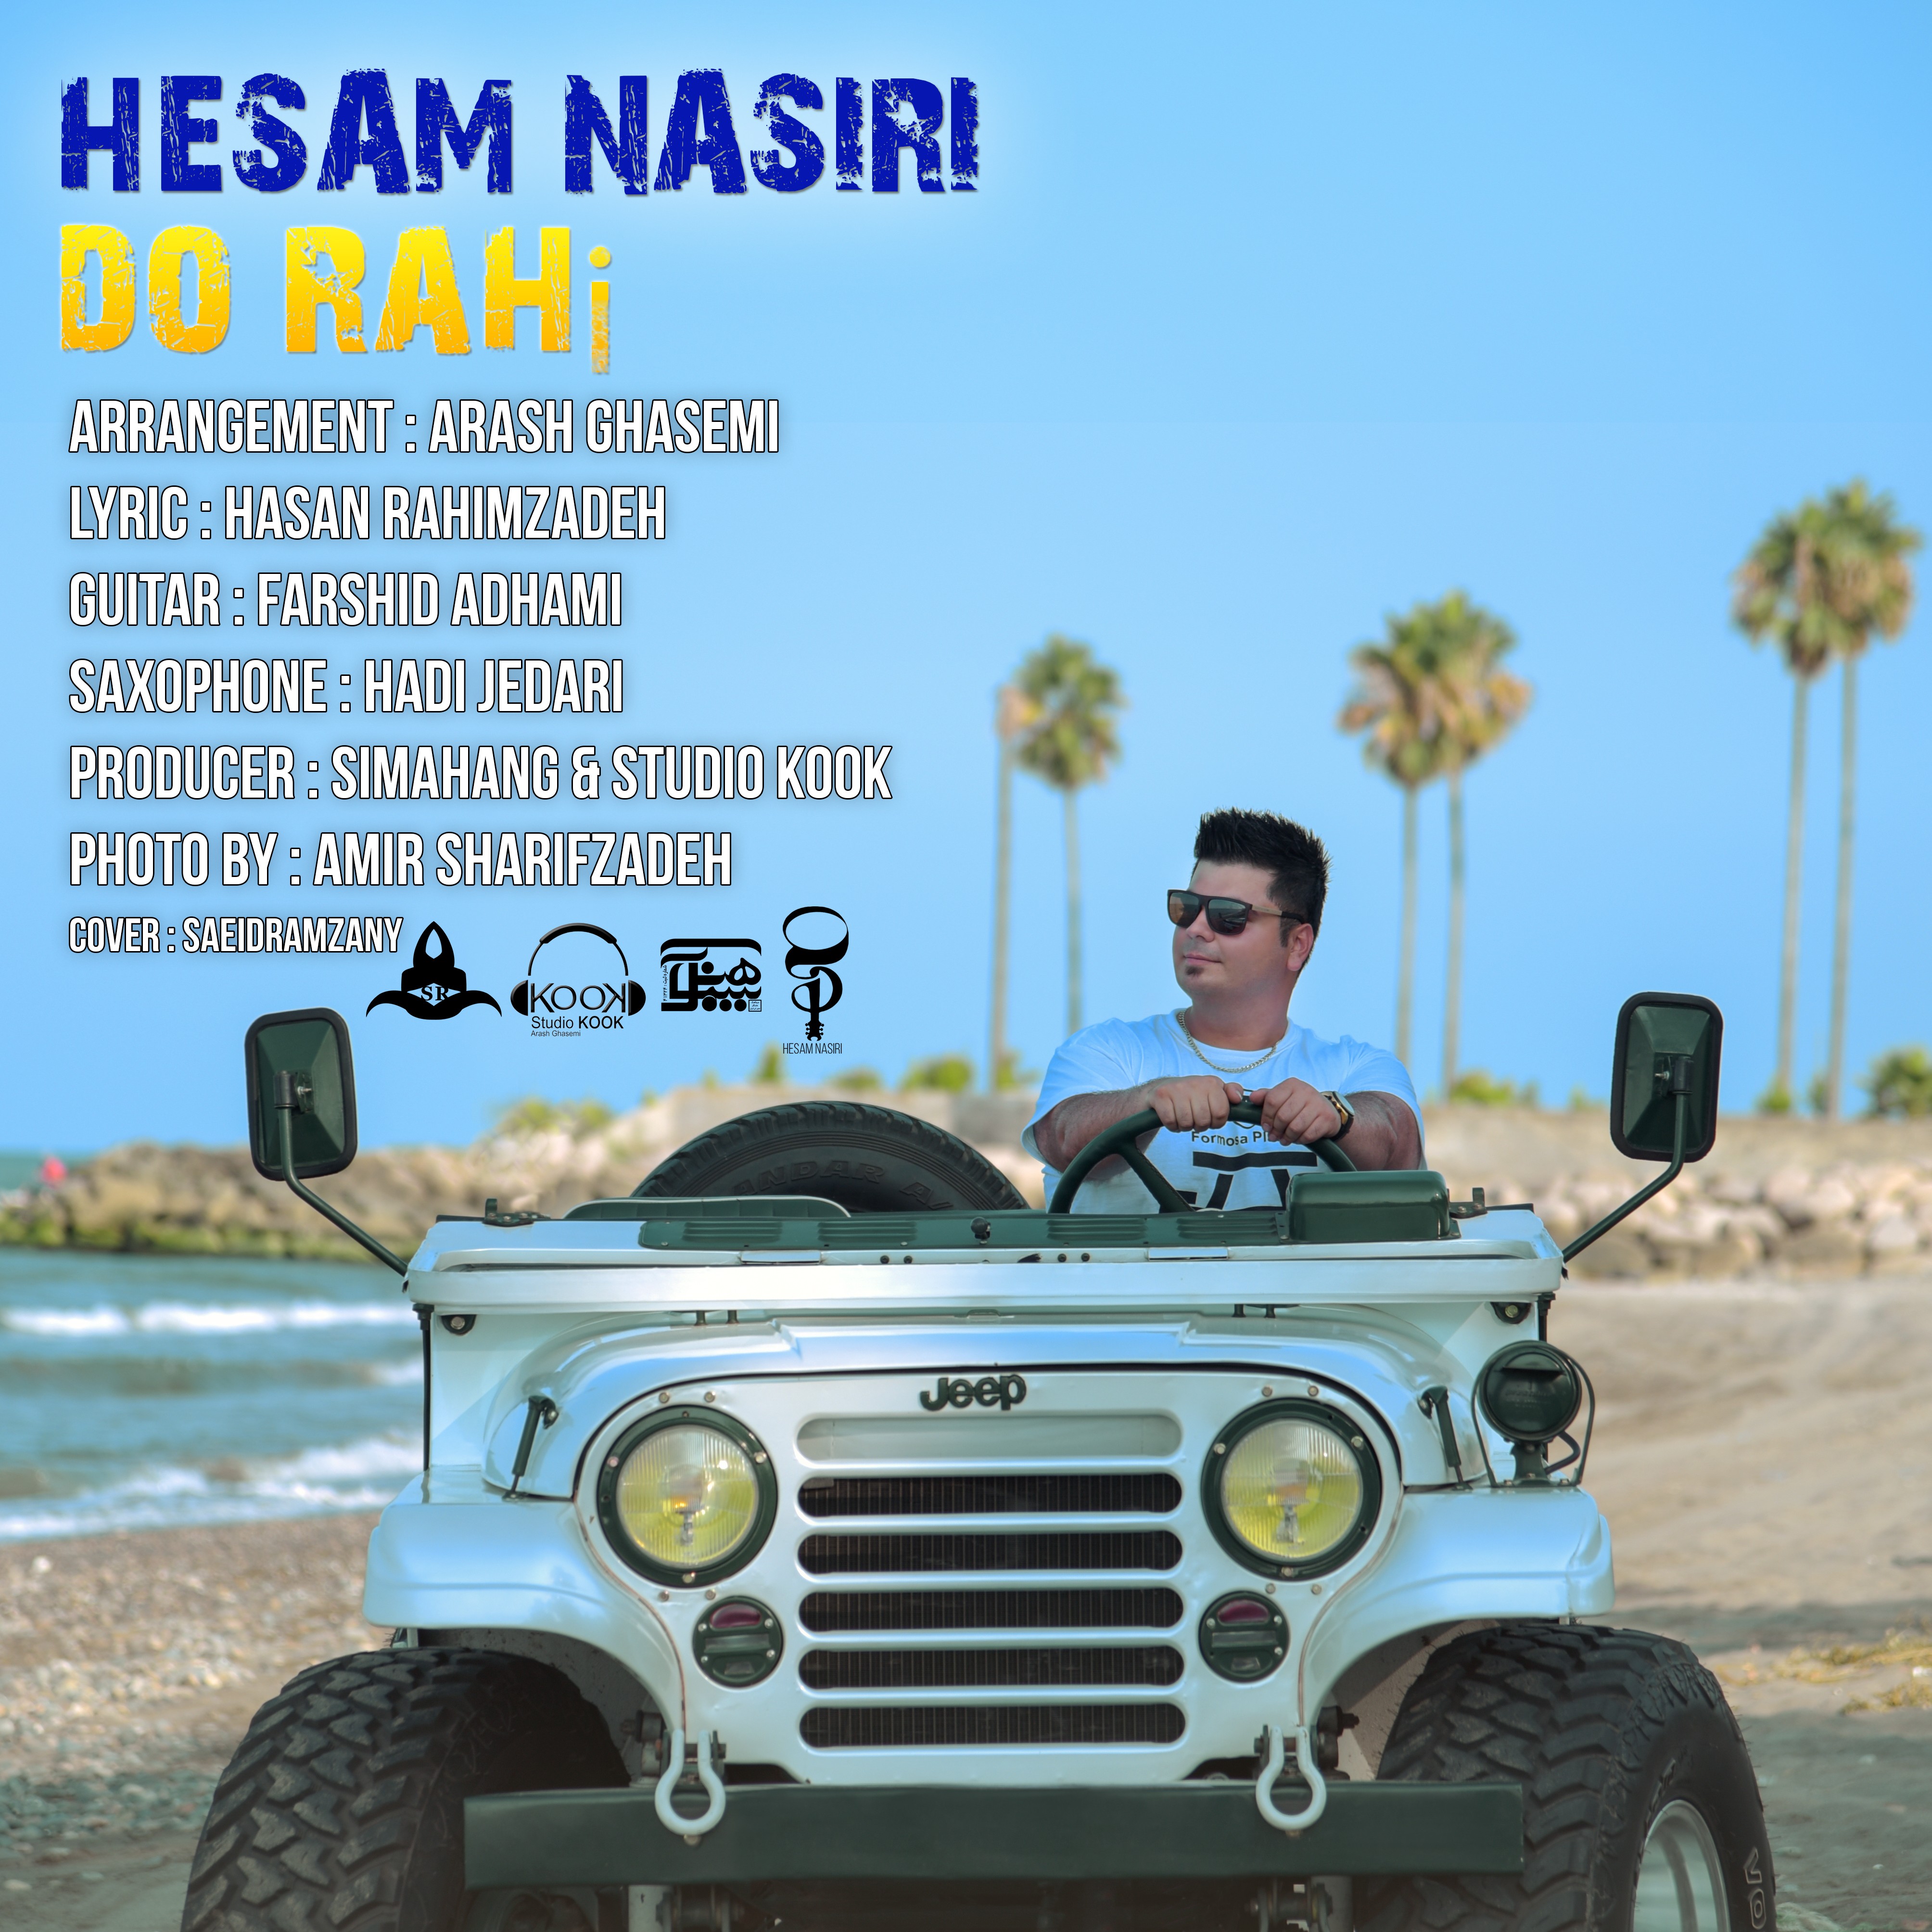  دانلود آهنگ جدید حسام نصیری - دو راهی | Download New Music By Hesam Nasiri - Do Rahi